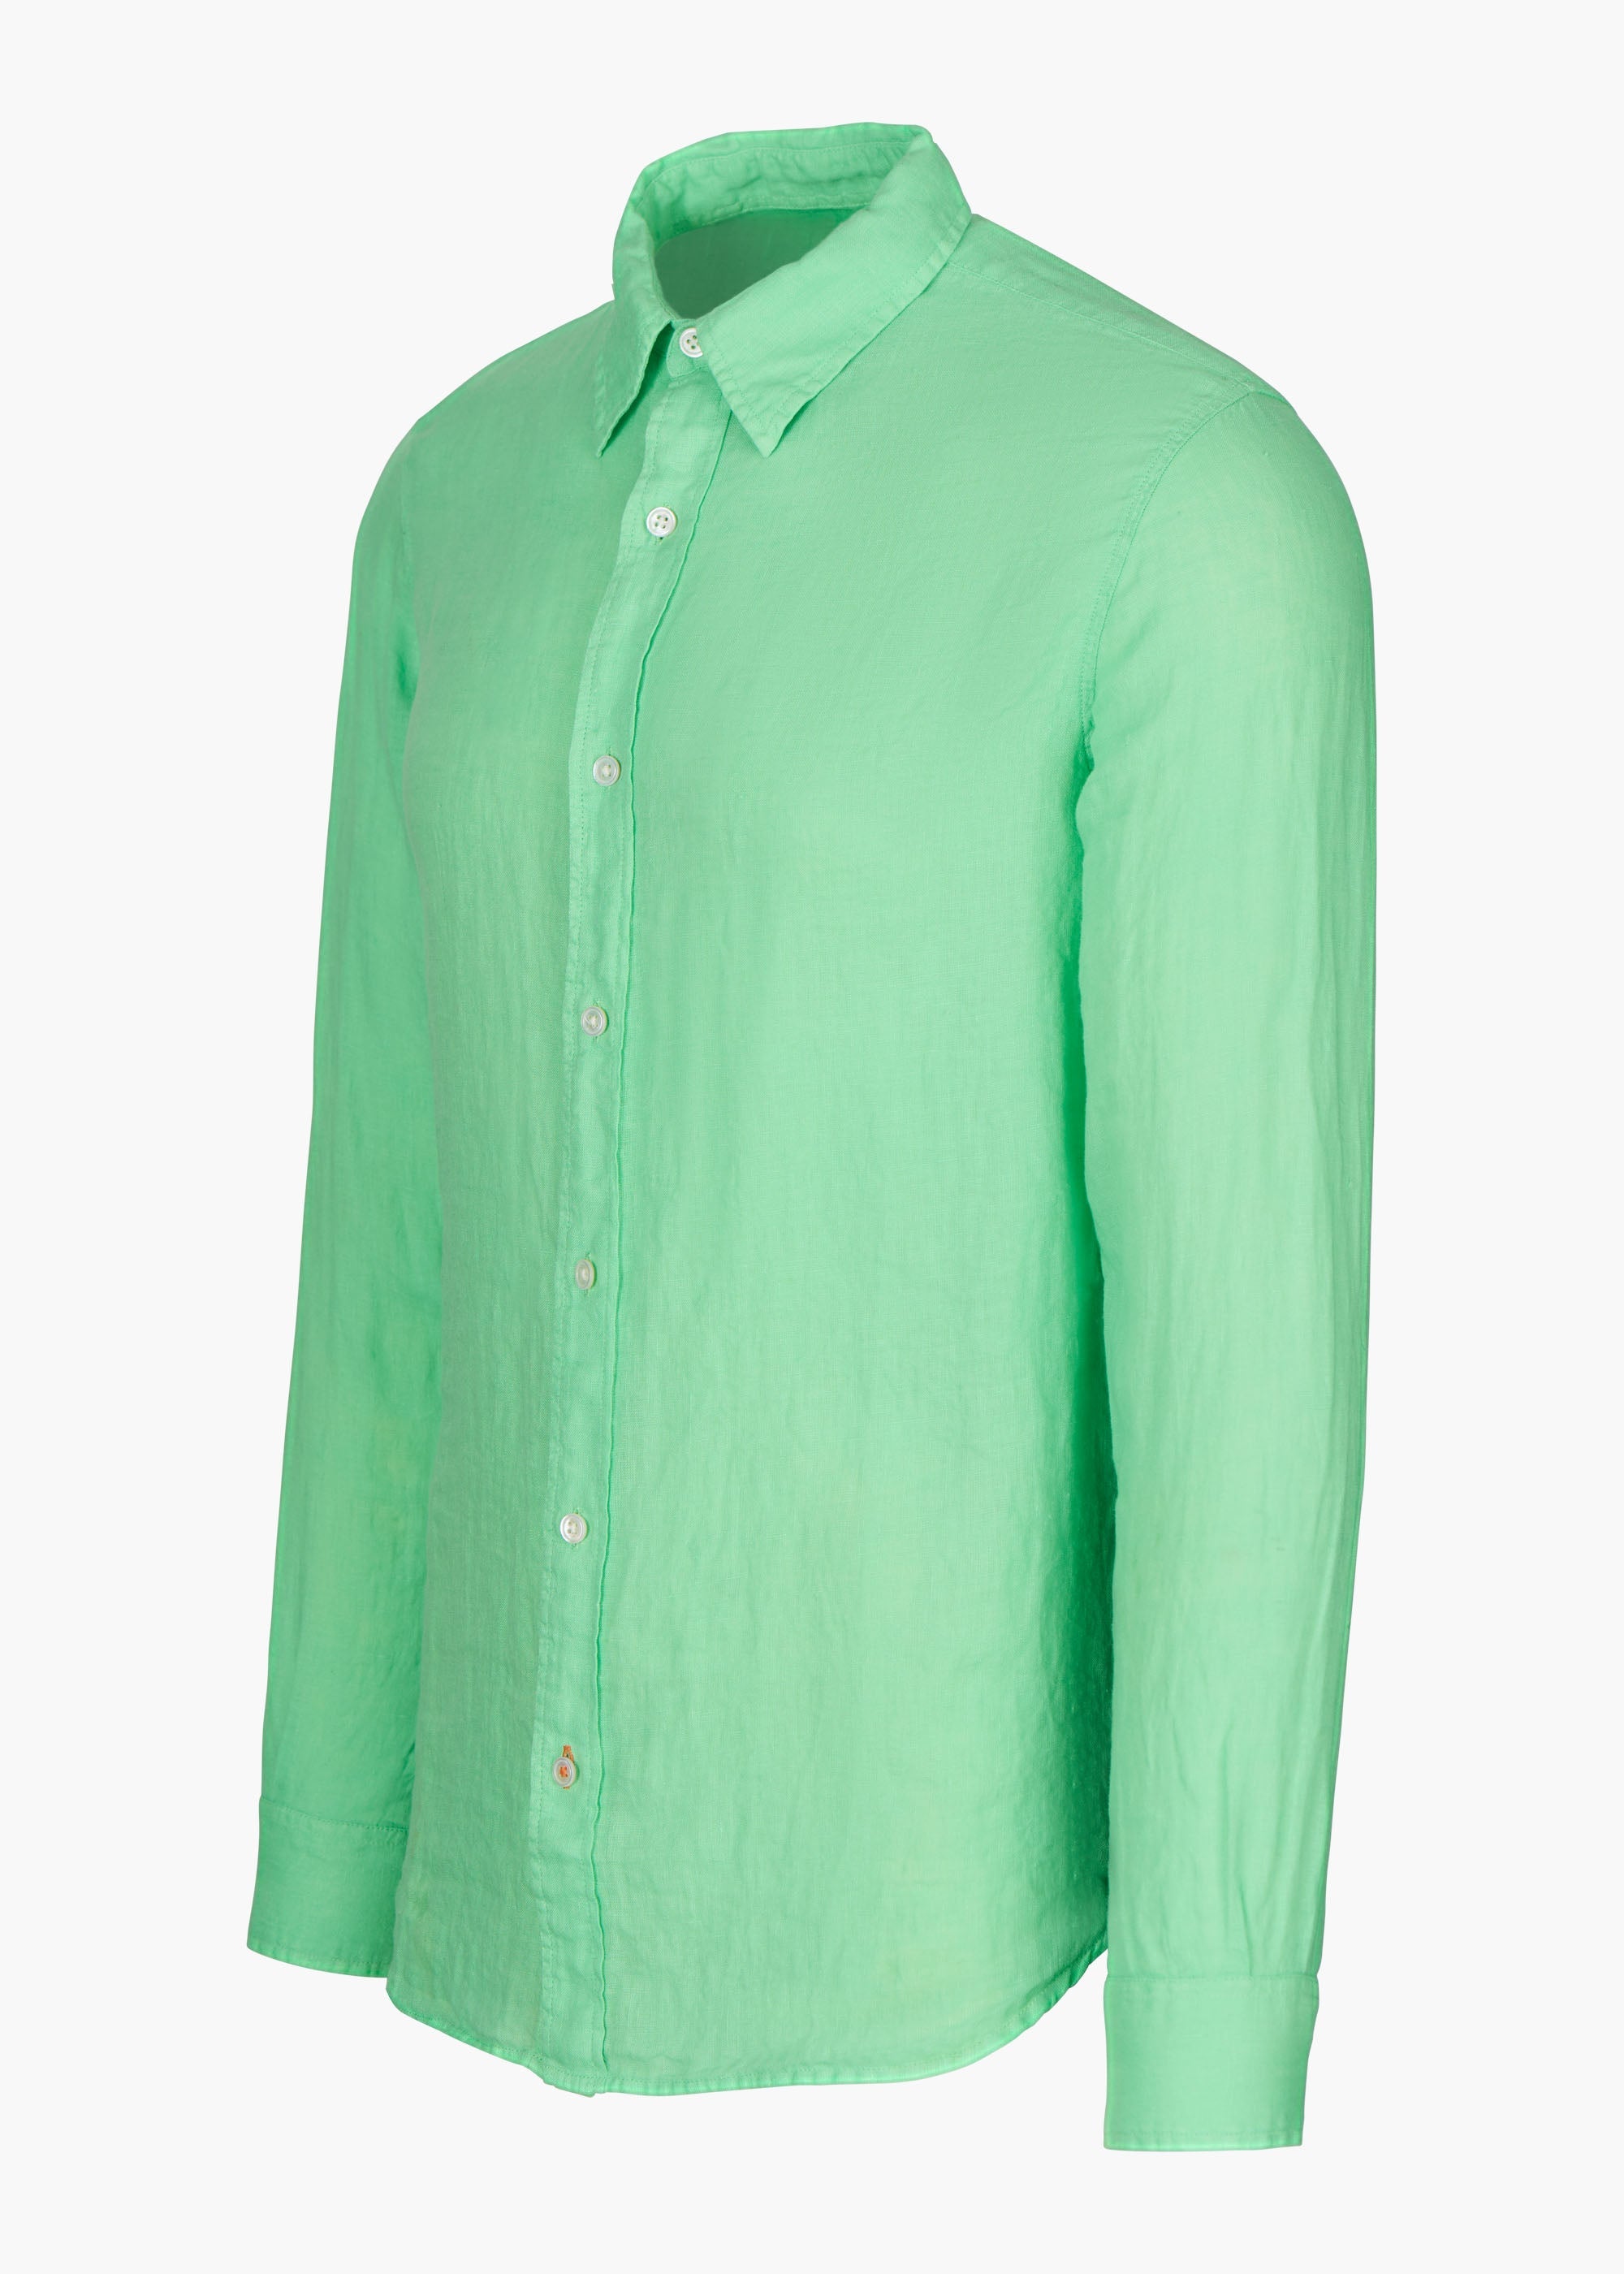 Amalfi Linen Shirt - background::white,variant::Sea Glass